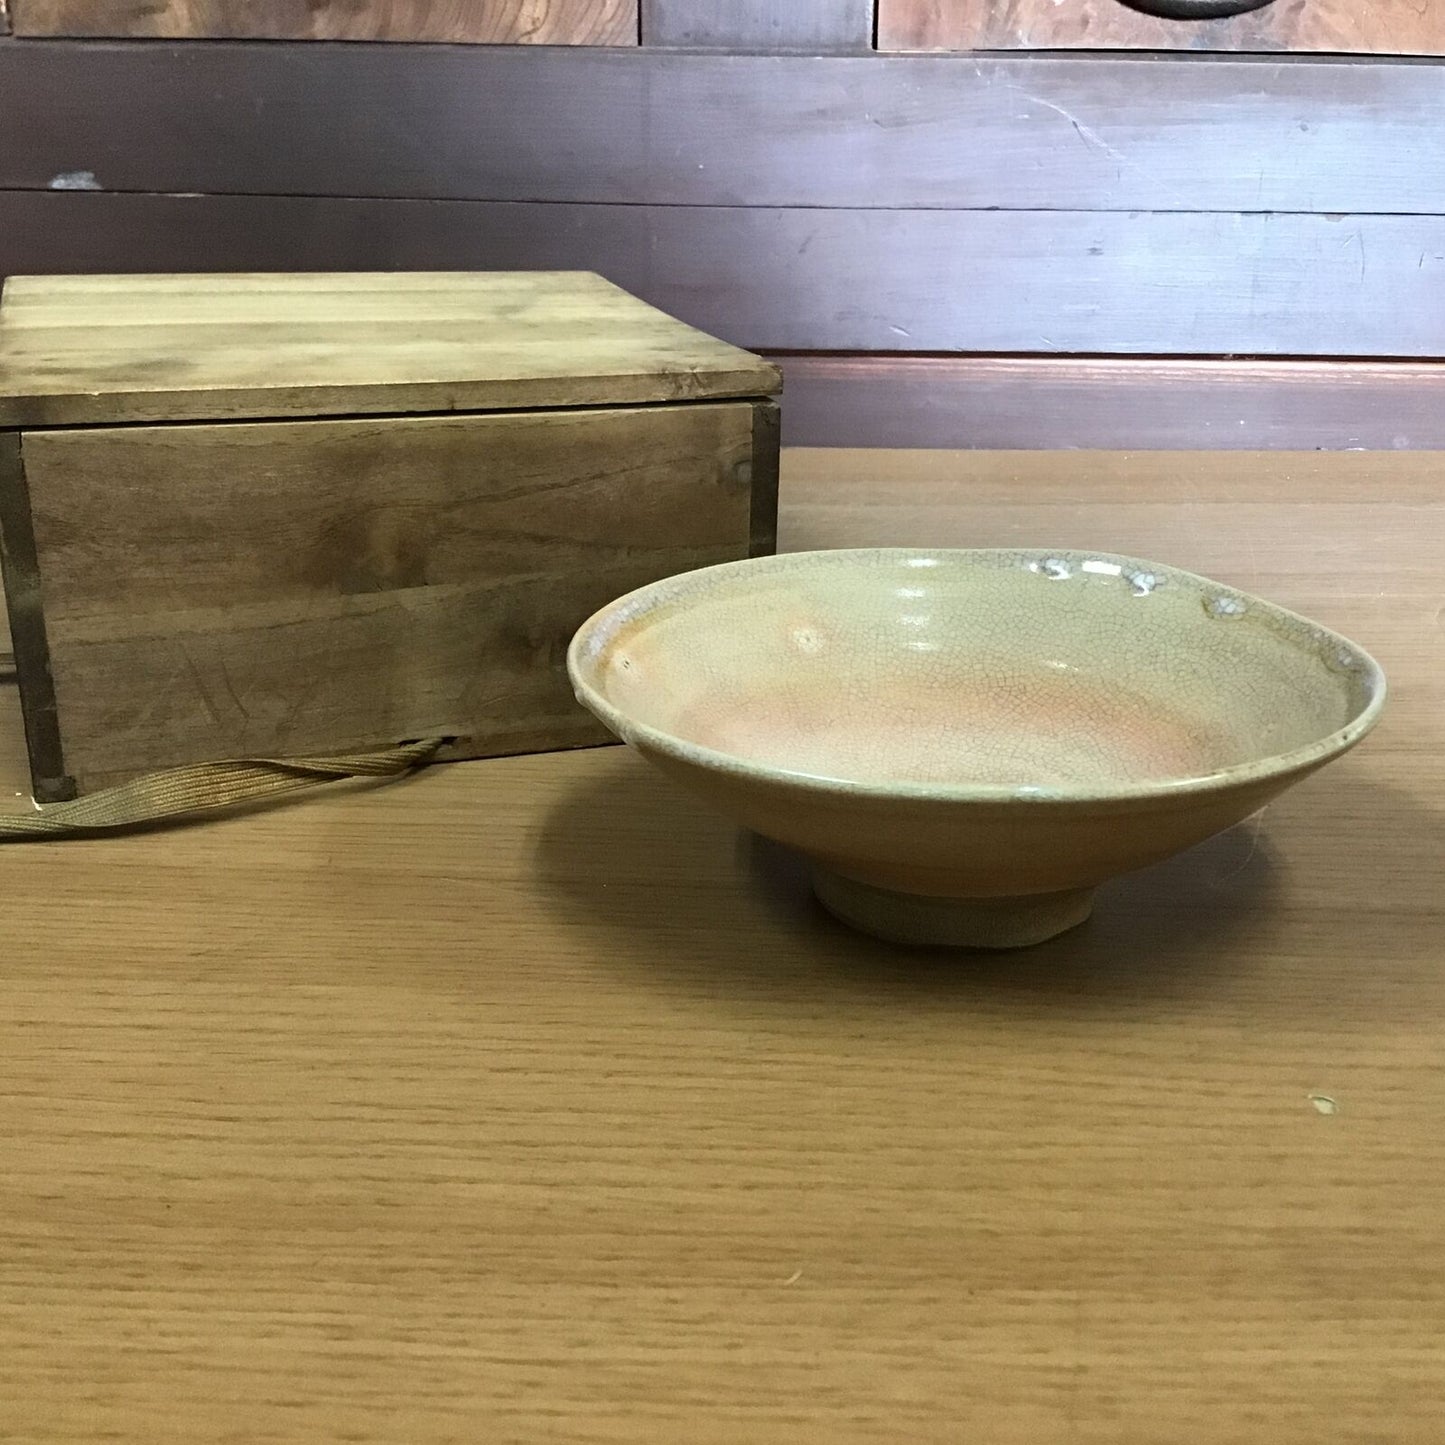 Y1058 CHAWAN Hagi-ware flat bowl box tea ceremony Japanese pottery antique Japan